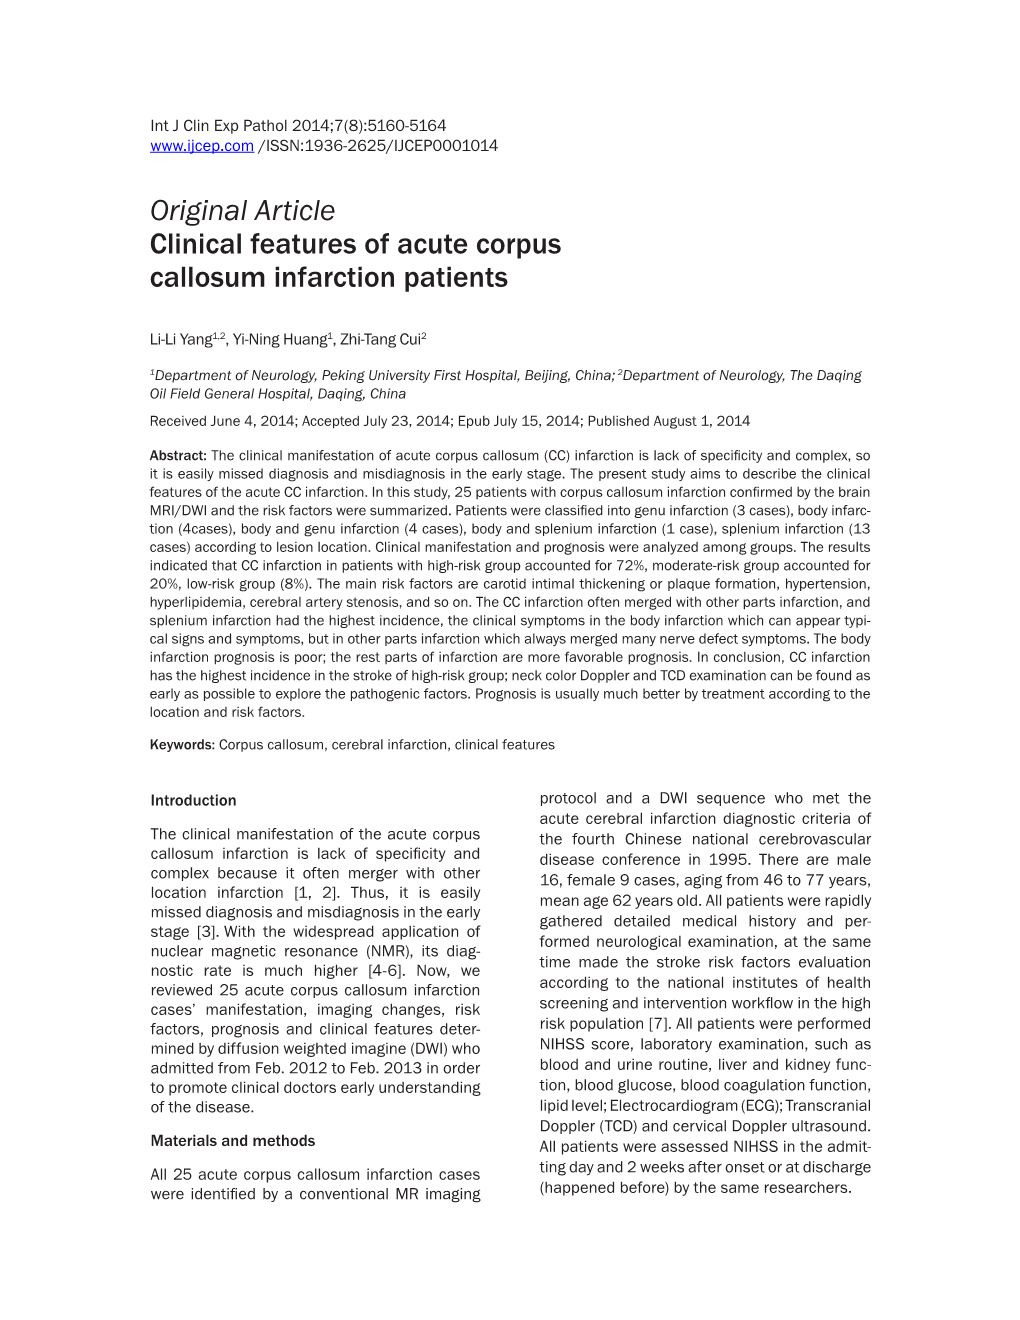 Original Article Clinical Features of Acute Corpus Callosum Infarction Patients